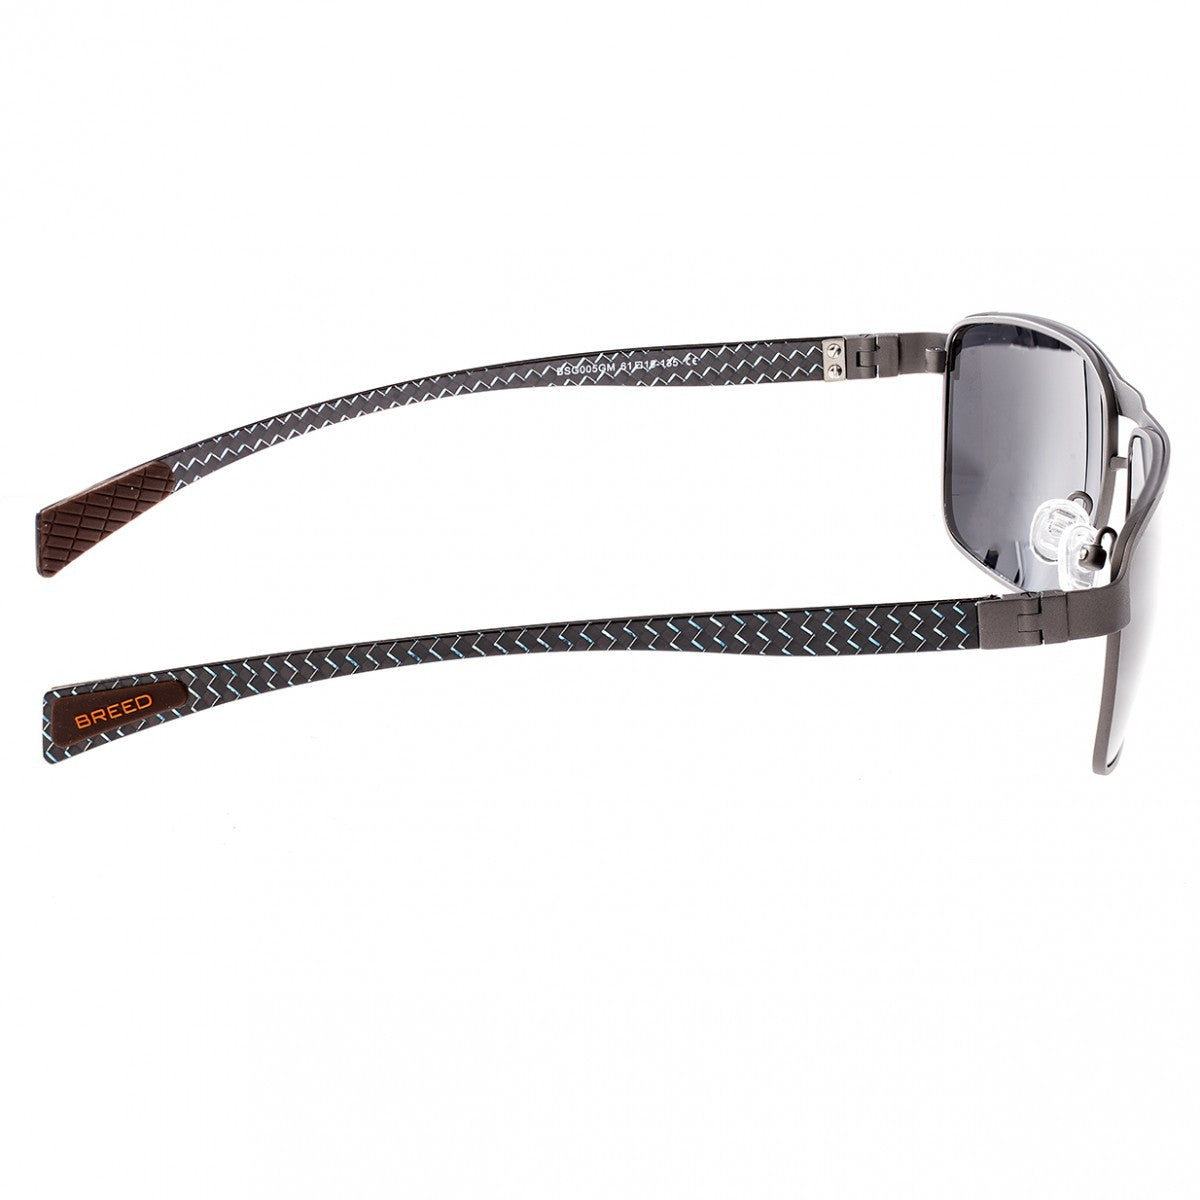 Breed Taurus Titanium and Carbon Fiber Polarized Sunglasses - Gunmetal/Black - BSG005GM